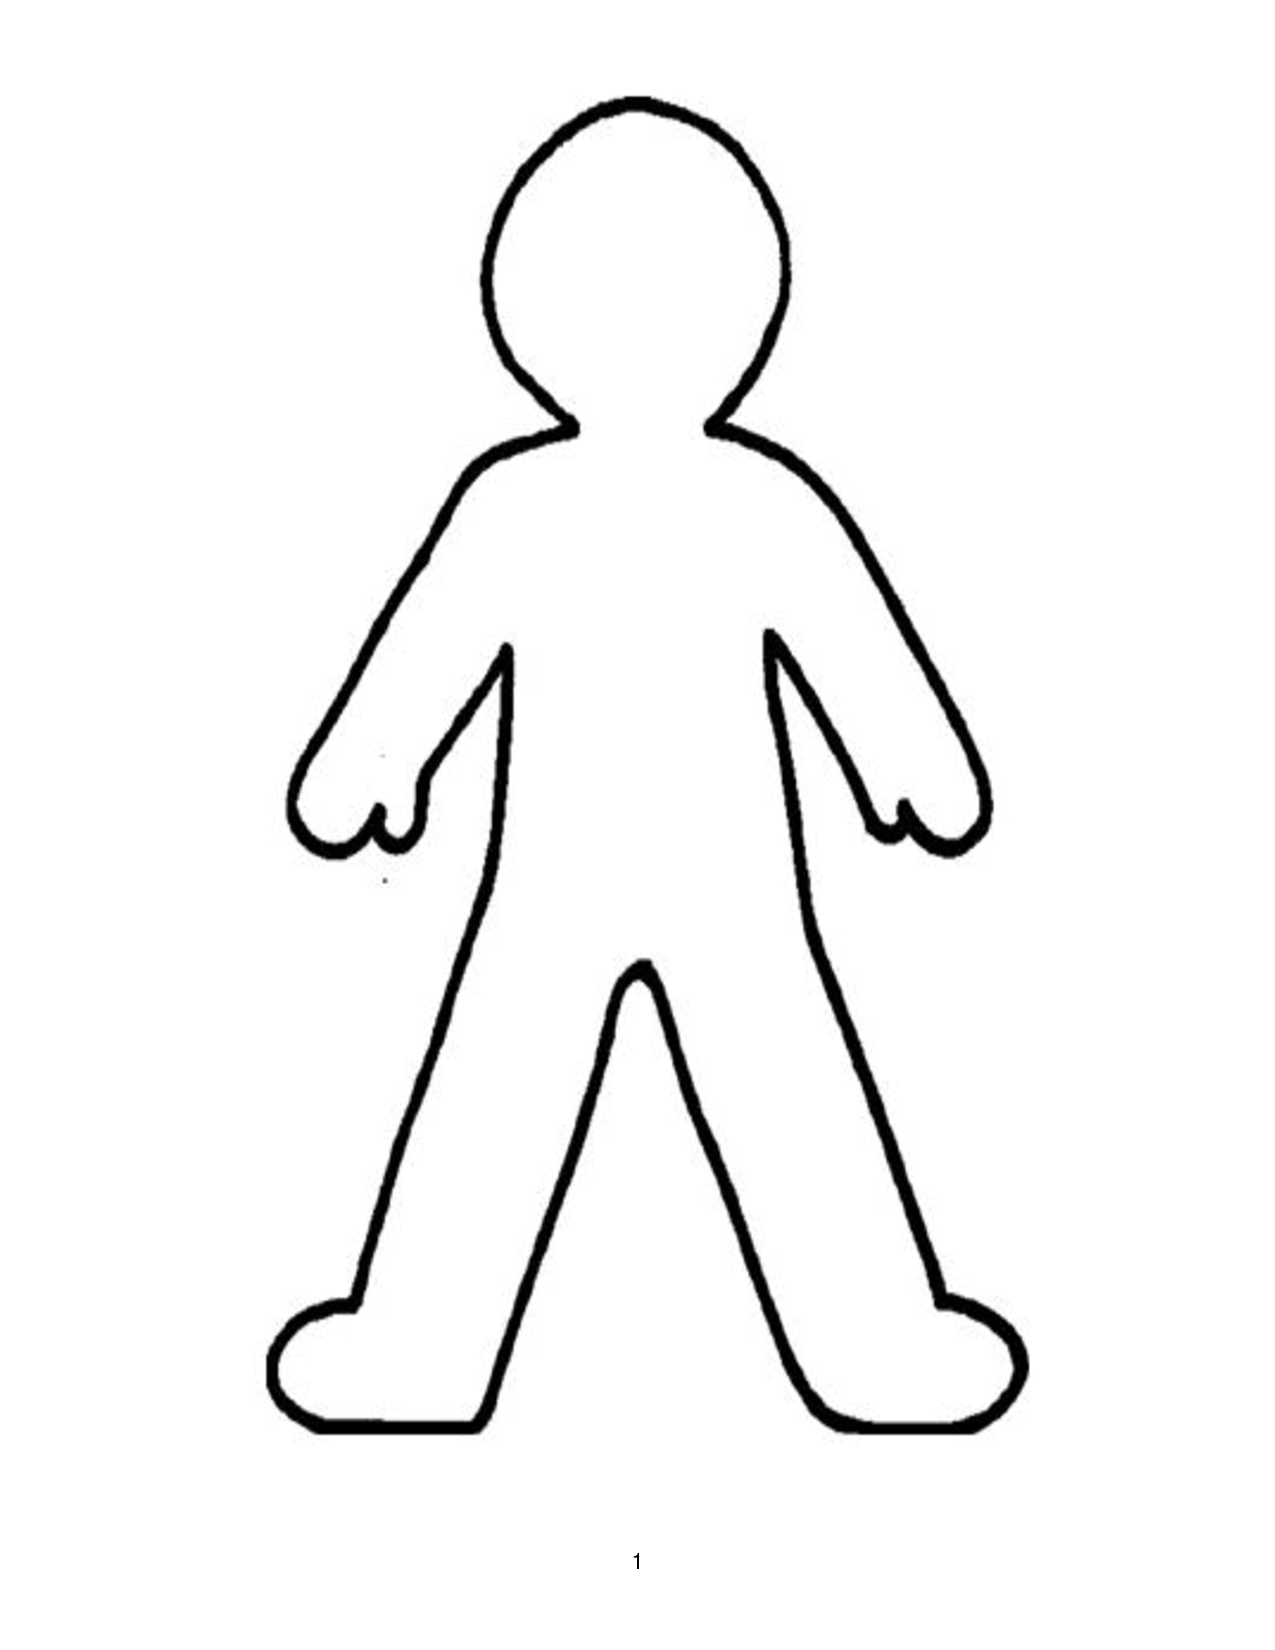 Gingerbread Man Outline | Free Download Clip Art | Free Clip Art ...